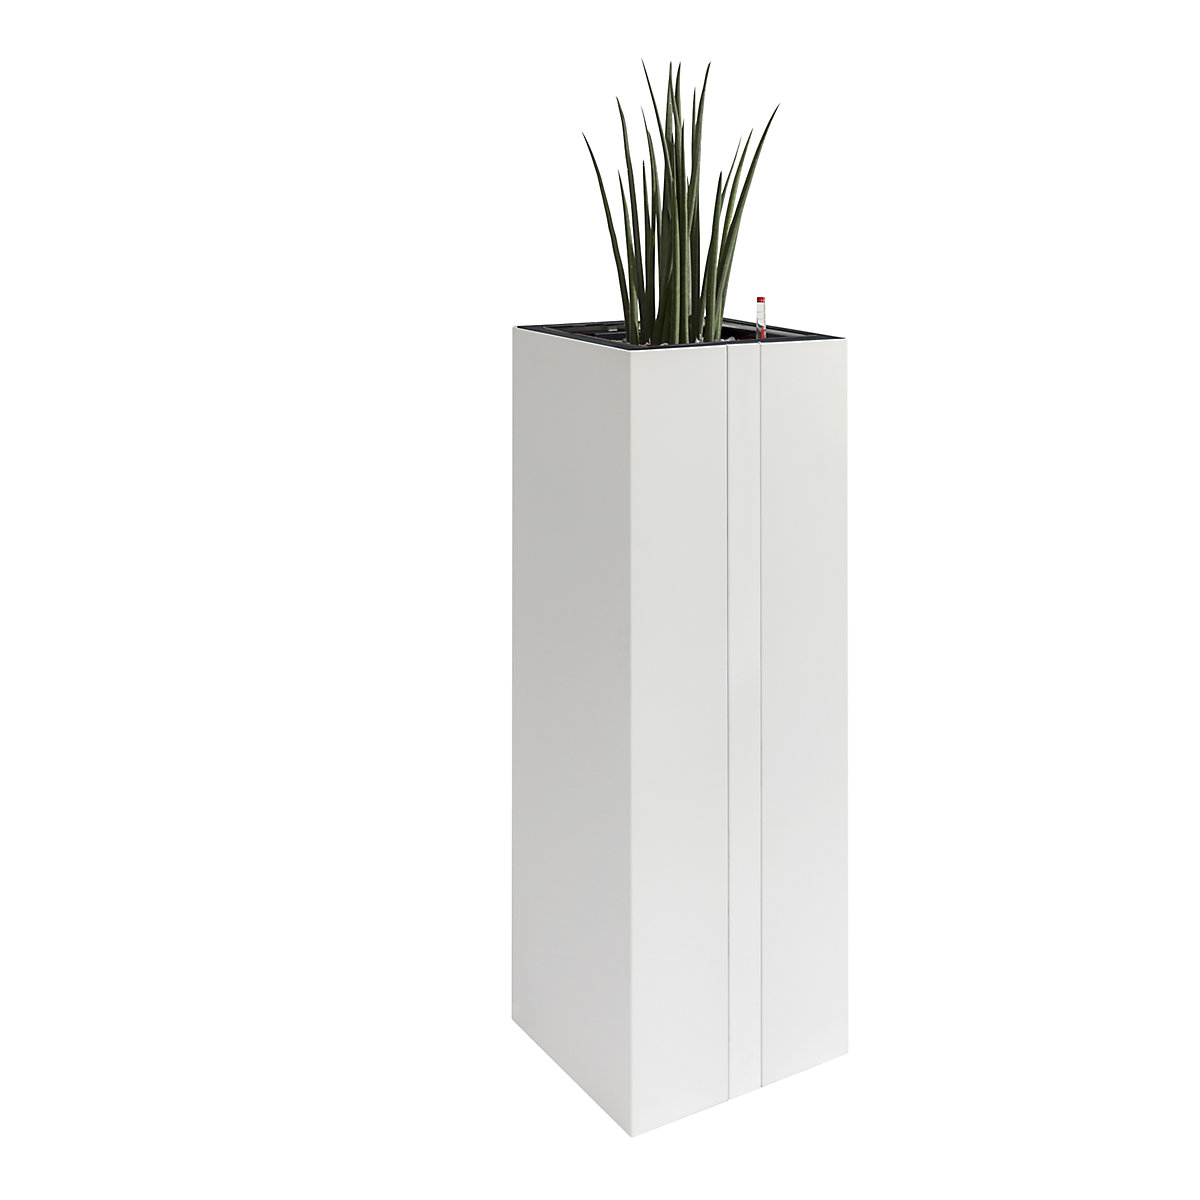 Vaso cubico, senza pianta – C+P, bianco, standard, alt. x largh. x prof. 1310 x 400 x 400 mm-2